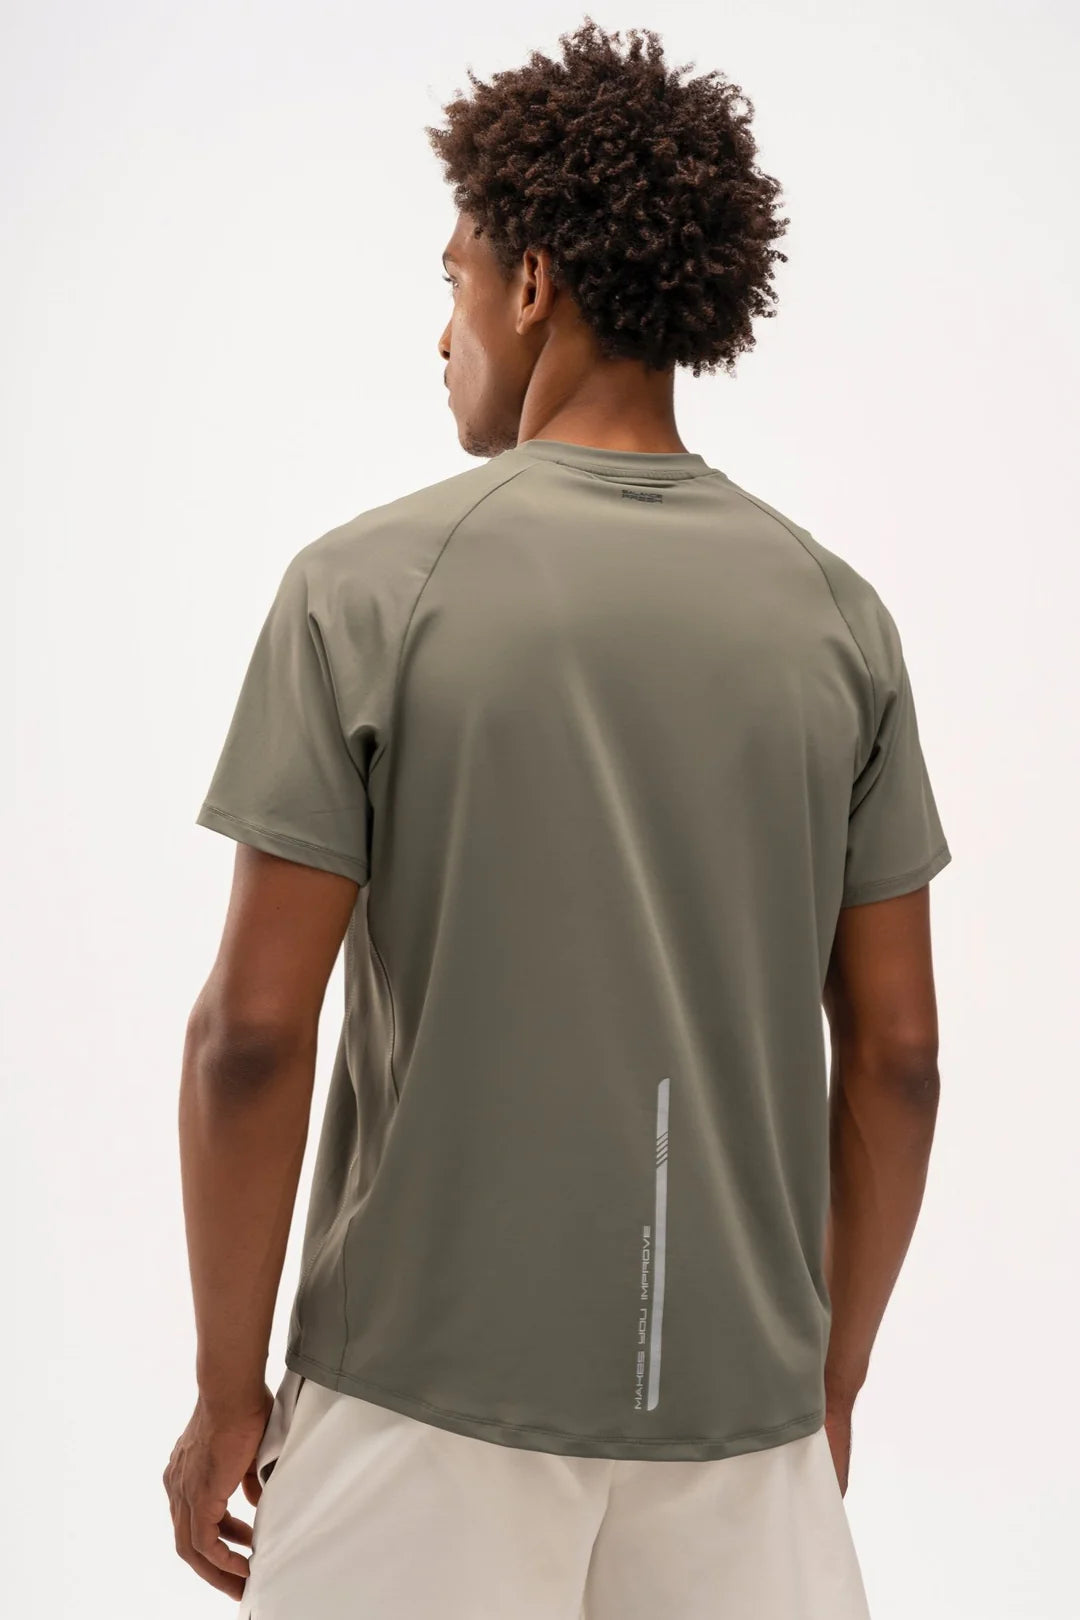 NOX Pro Fit  Shirt - Herren - grün